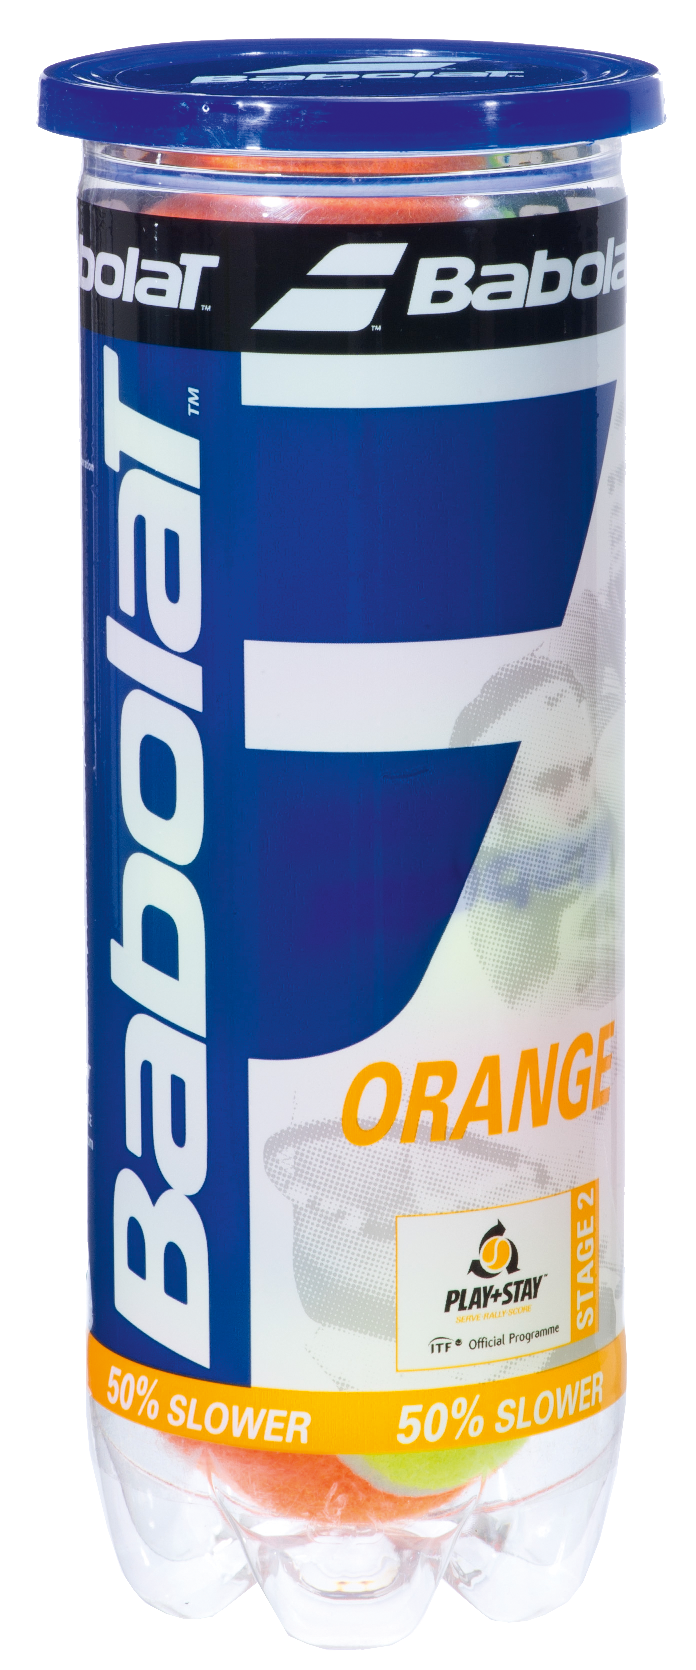 Oranje (3 ballen/tube)